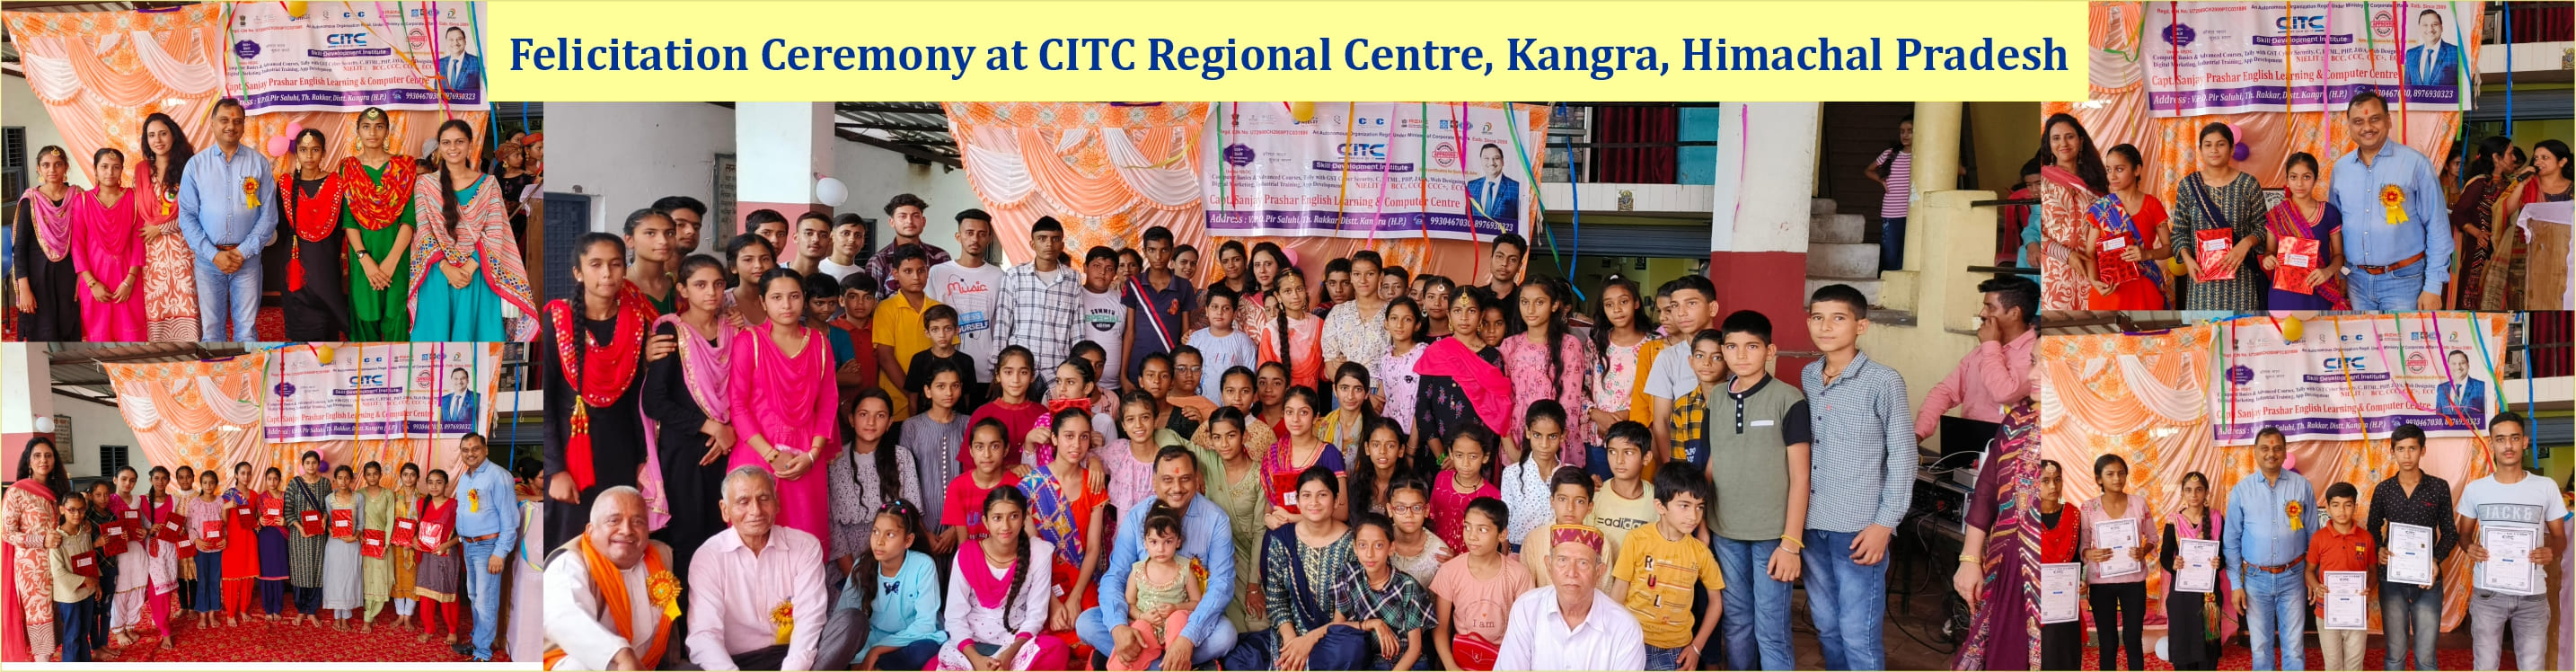 CITC Regional Centre, Kangra, Himachal Pradesh